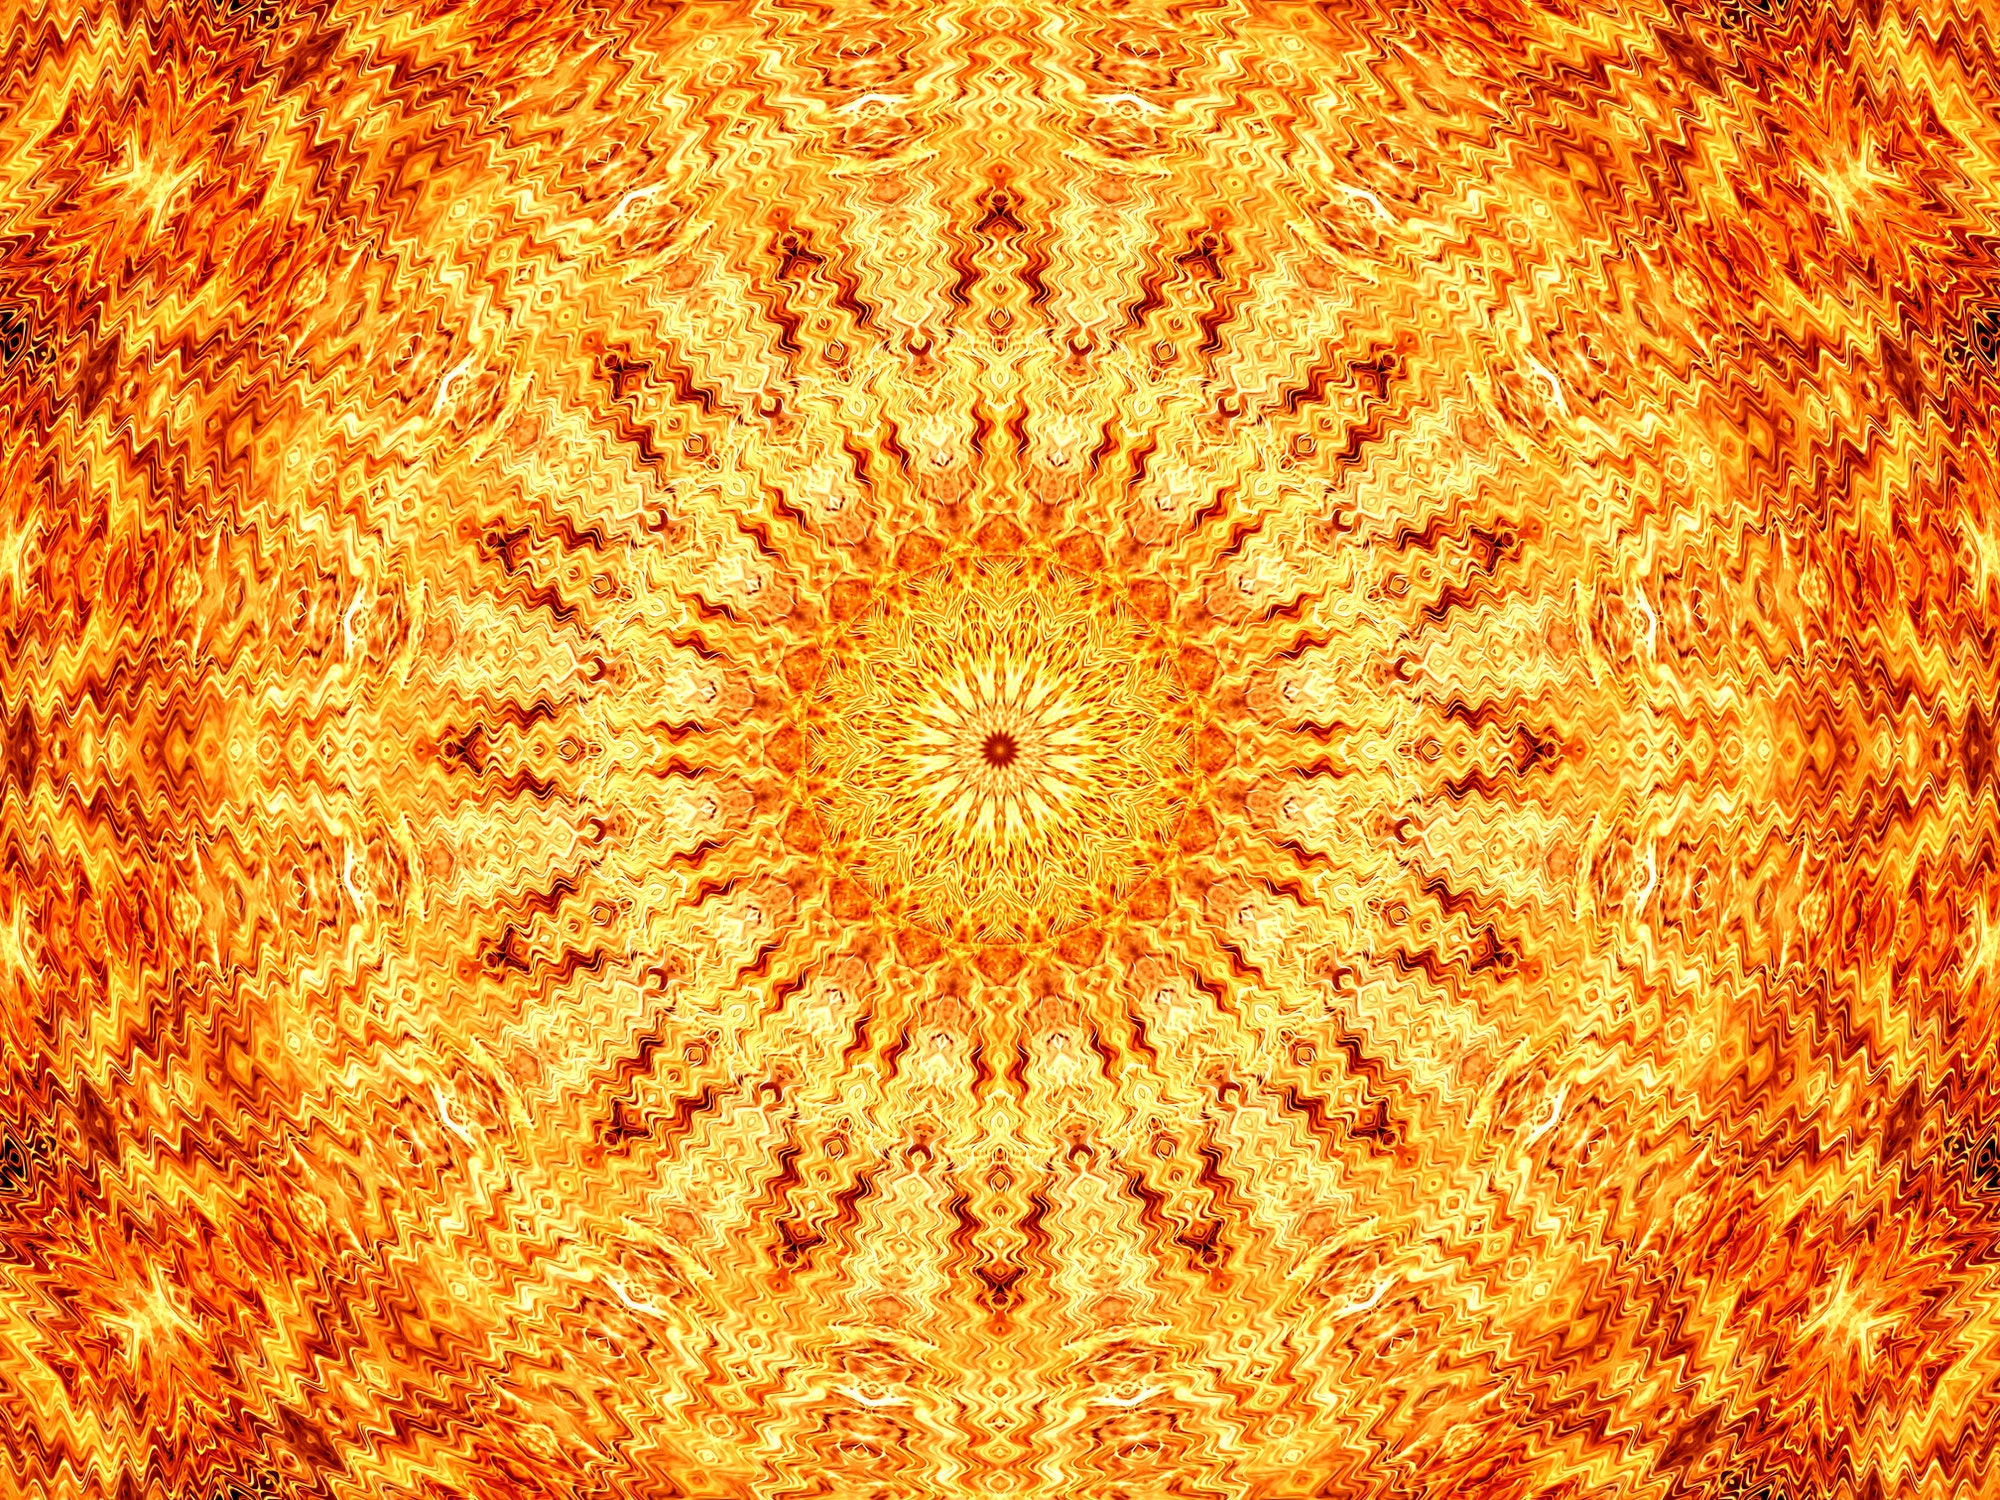 Full Frame Abstract Background of Orange Fire Mandala Pattern